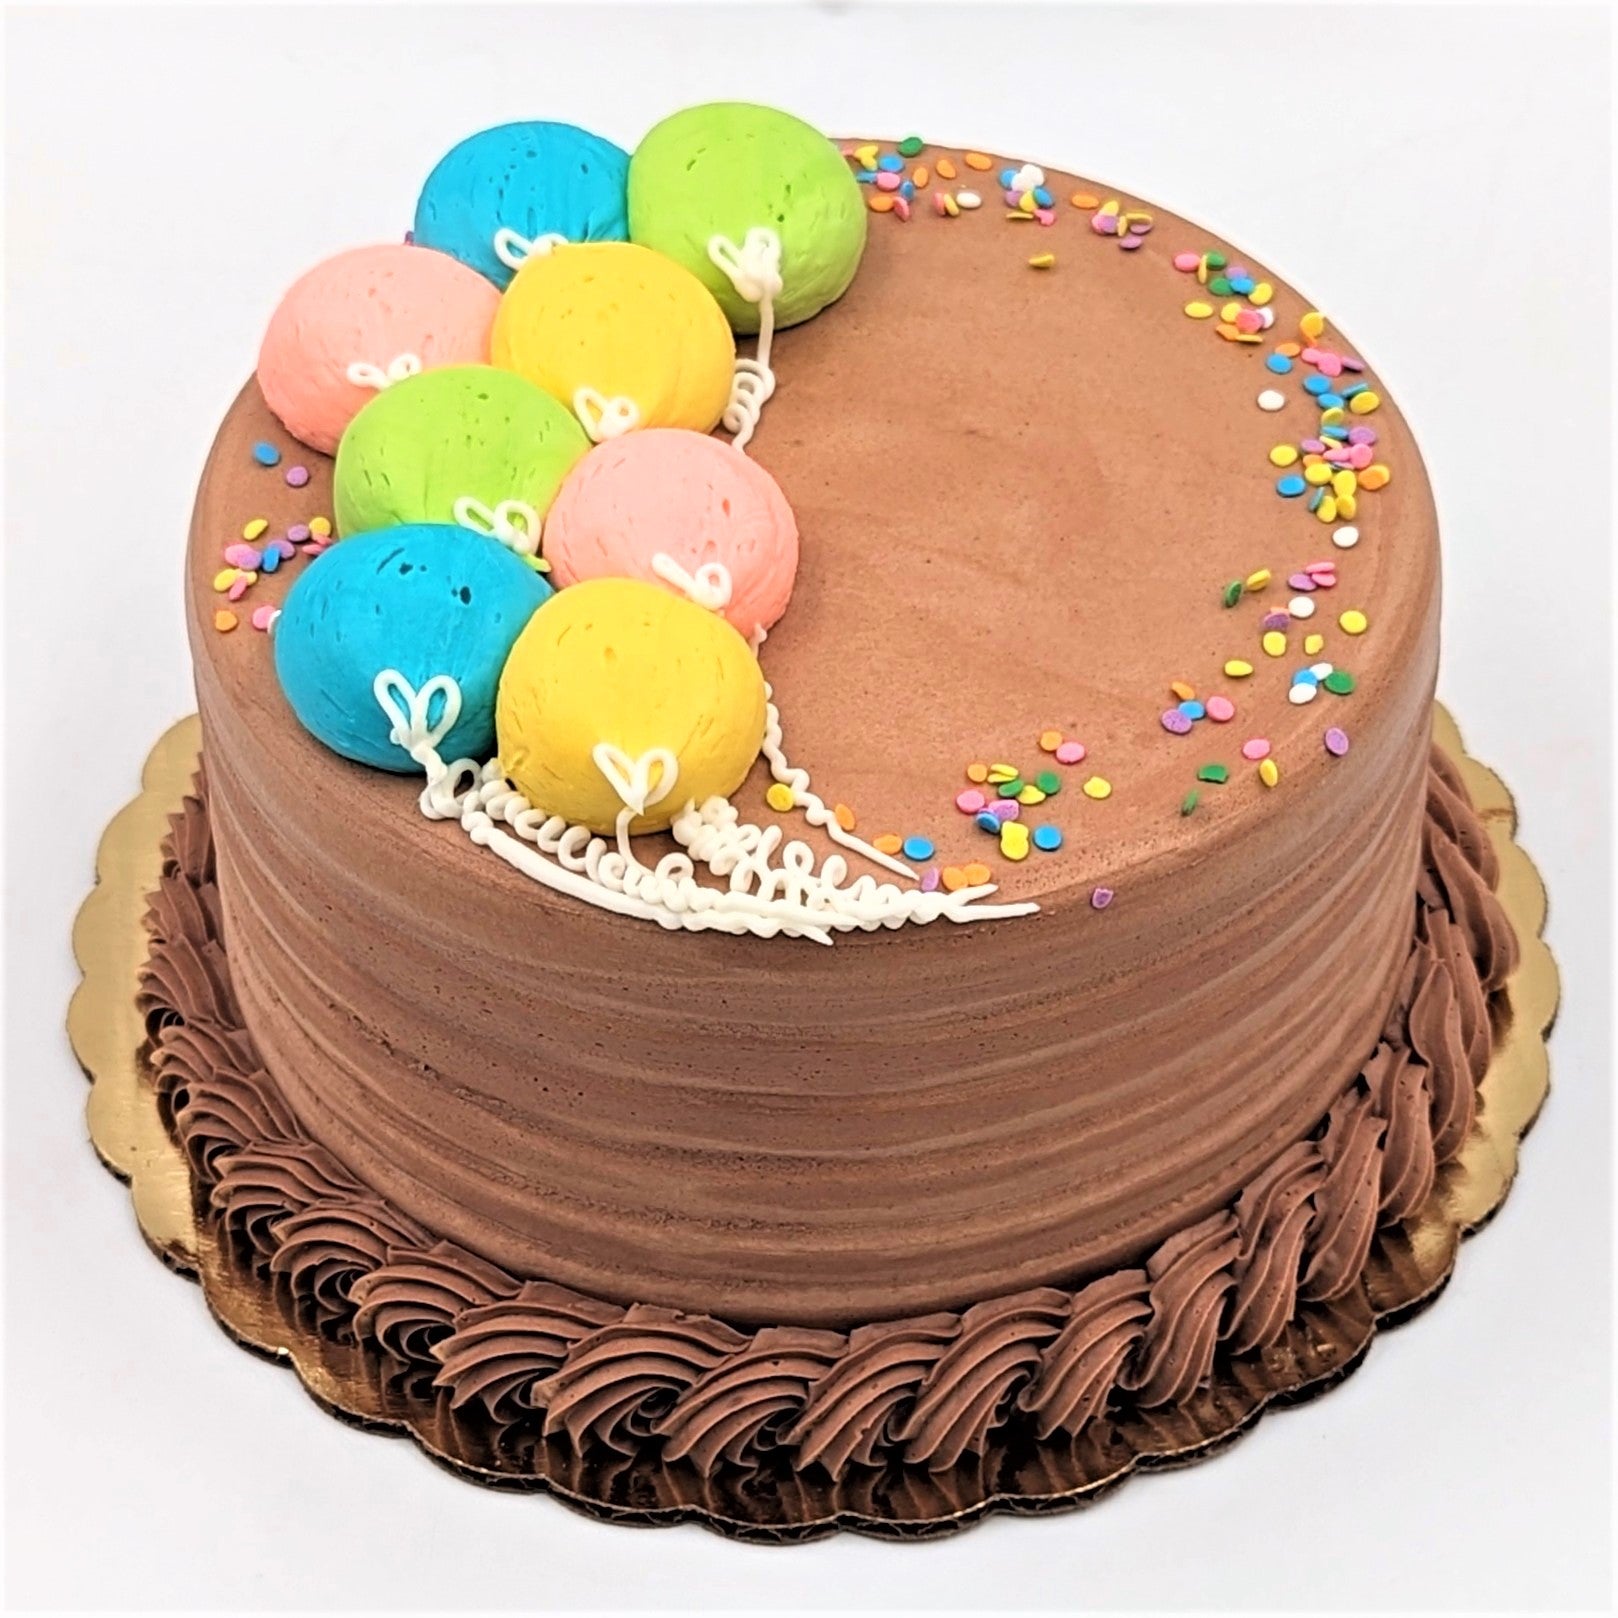 Top Customised Birthday Cakes in Ernakulam - Best Personalized Birthday  Cakes - Justdial